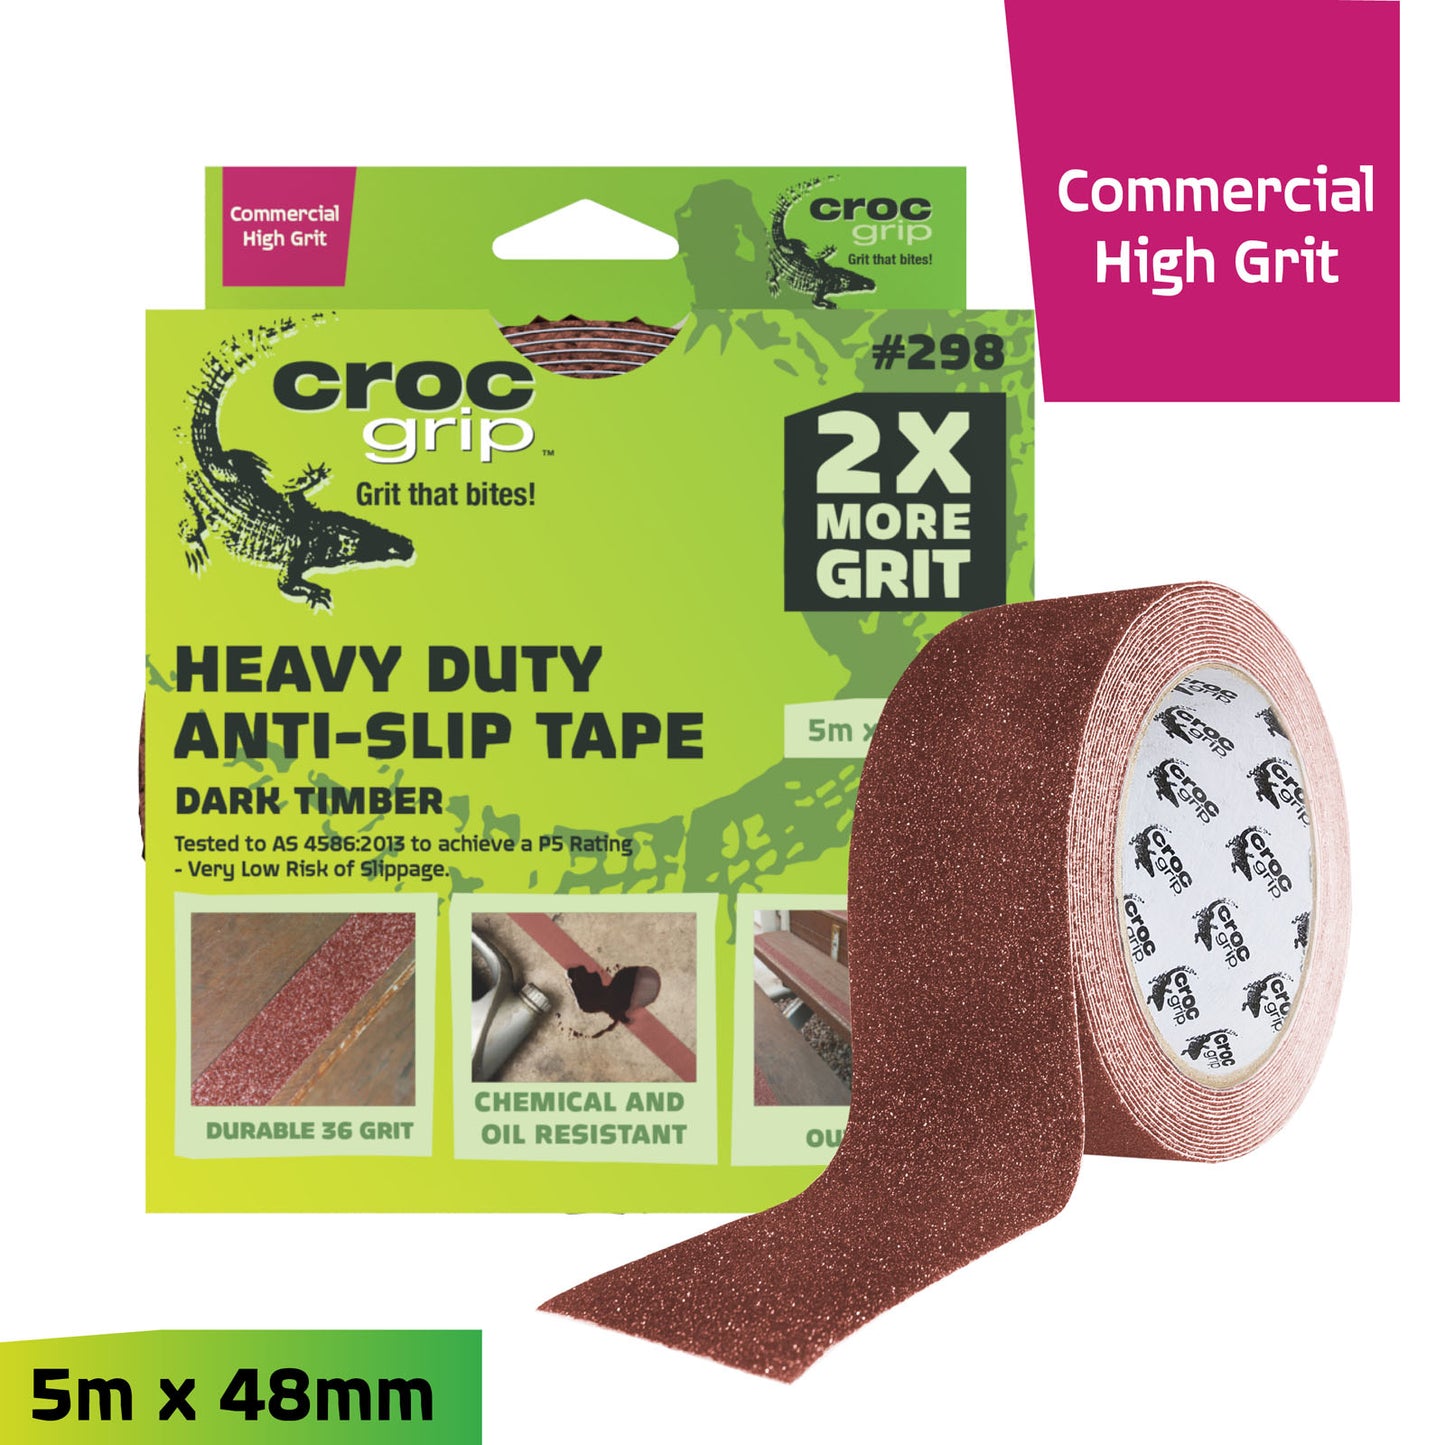 5M x 48MM Dark Timber Commercial High Grit Heavy Duty Anti-Slip Tape